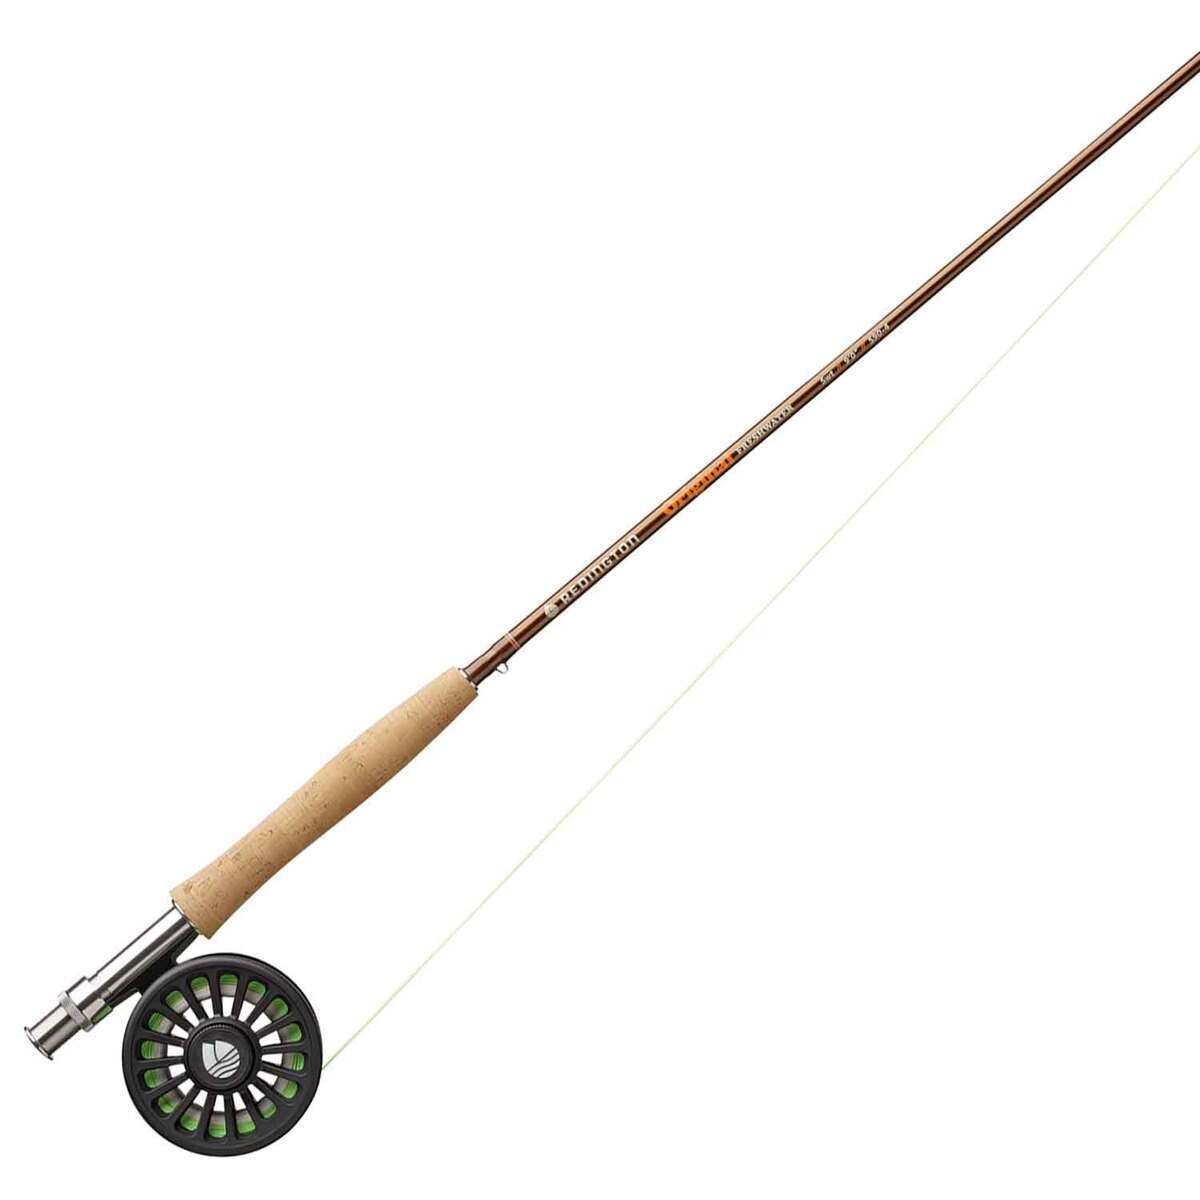 Okuma SLV 8/9 wt, 4-piece, fly rod is a great casting fly rod for